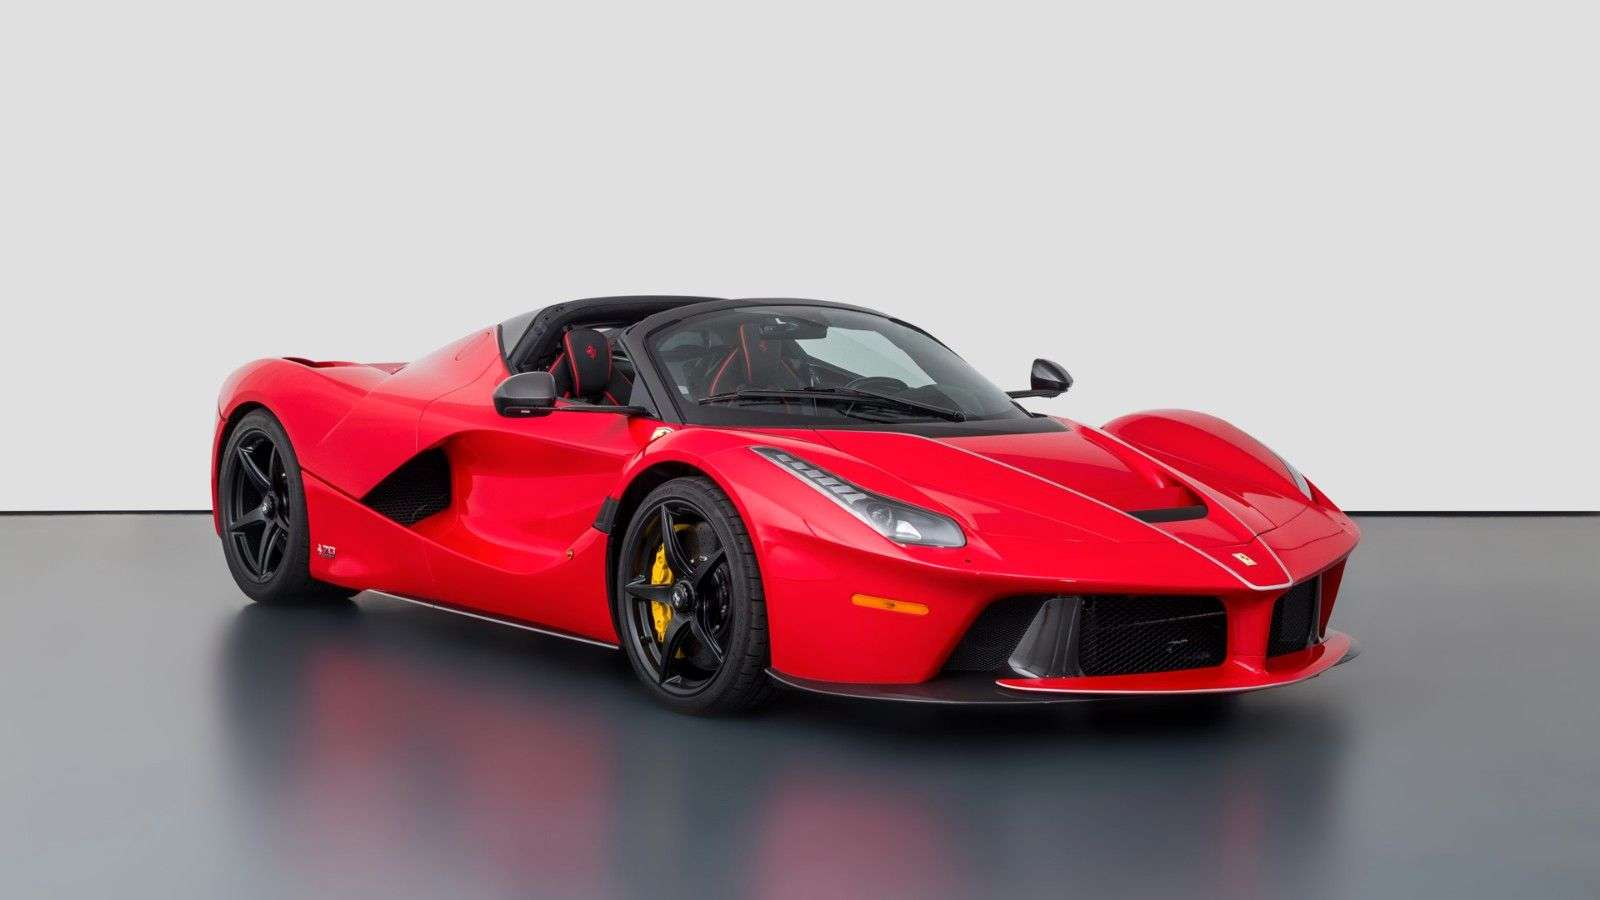 Ferrari LaFerrari Convertible in Red used in Pleidelsheim for € 6,771,100.-